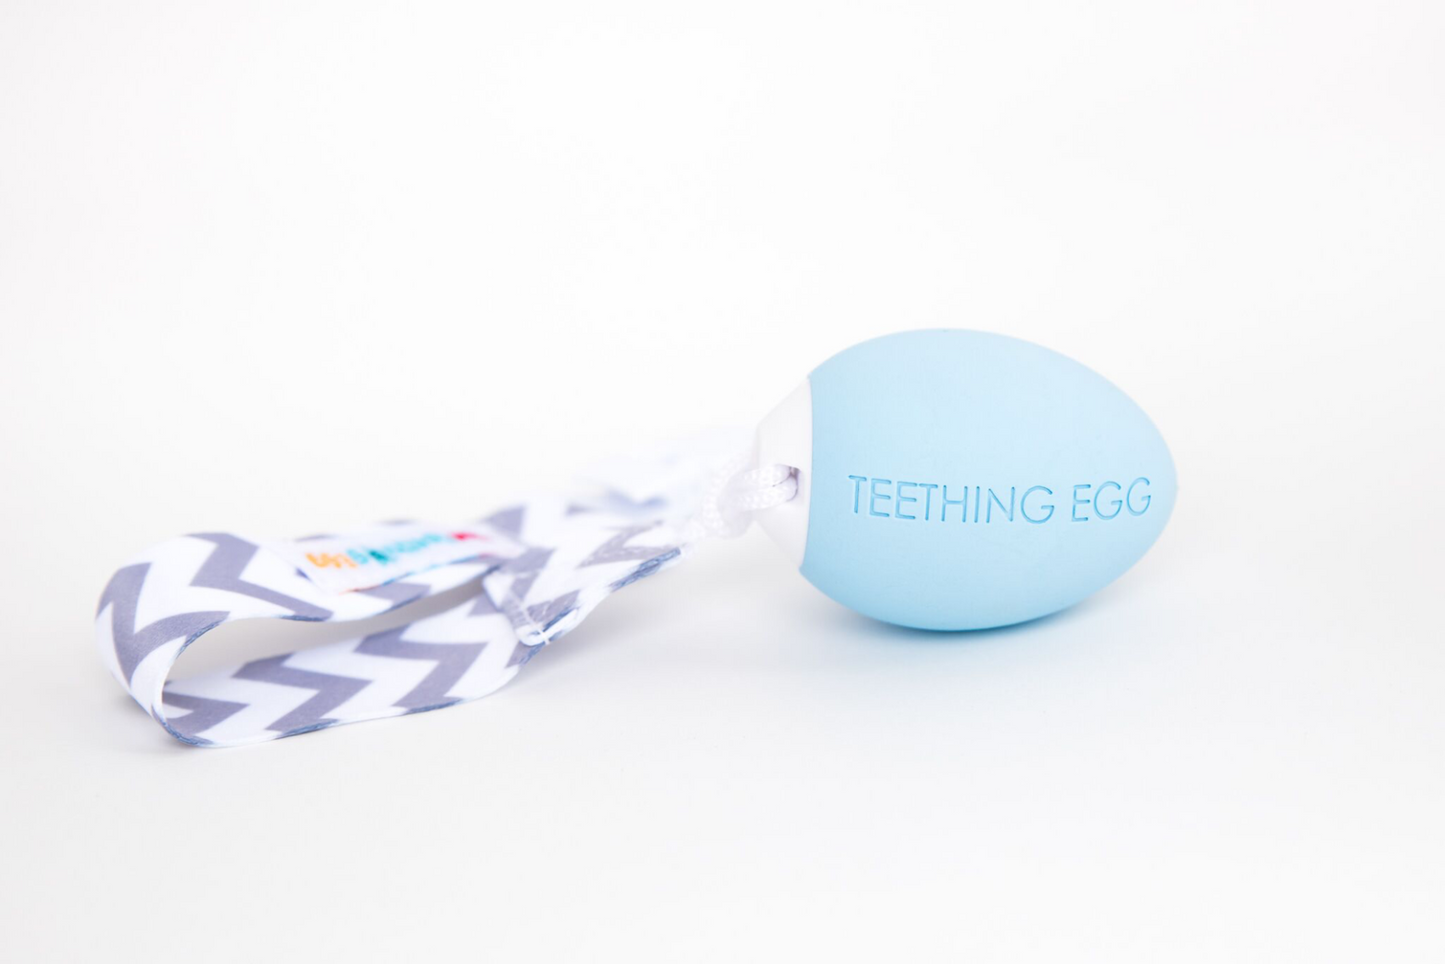 The Teething Egg